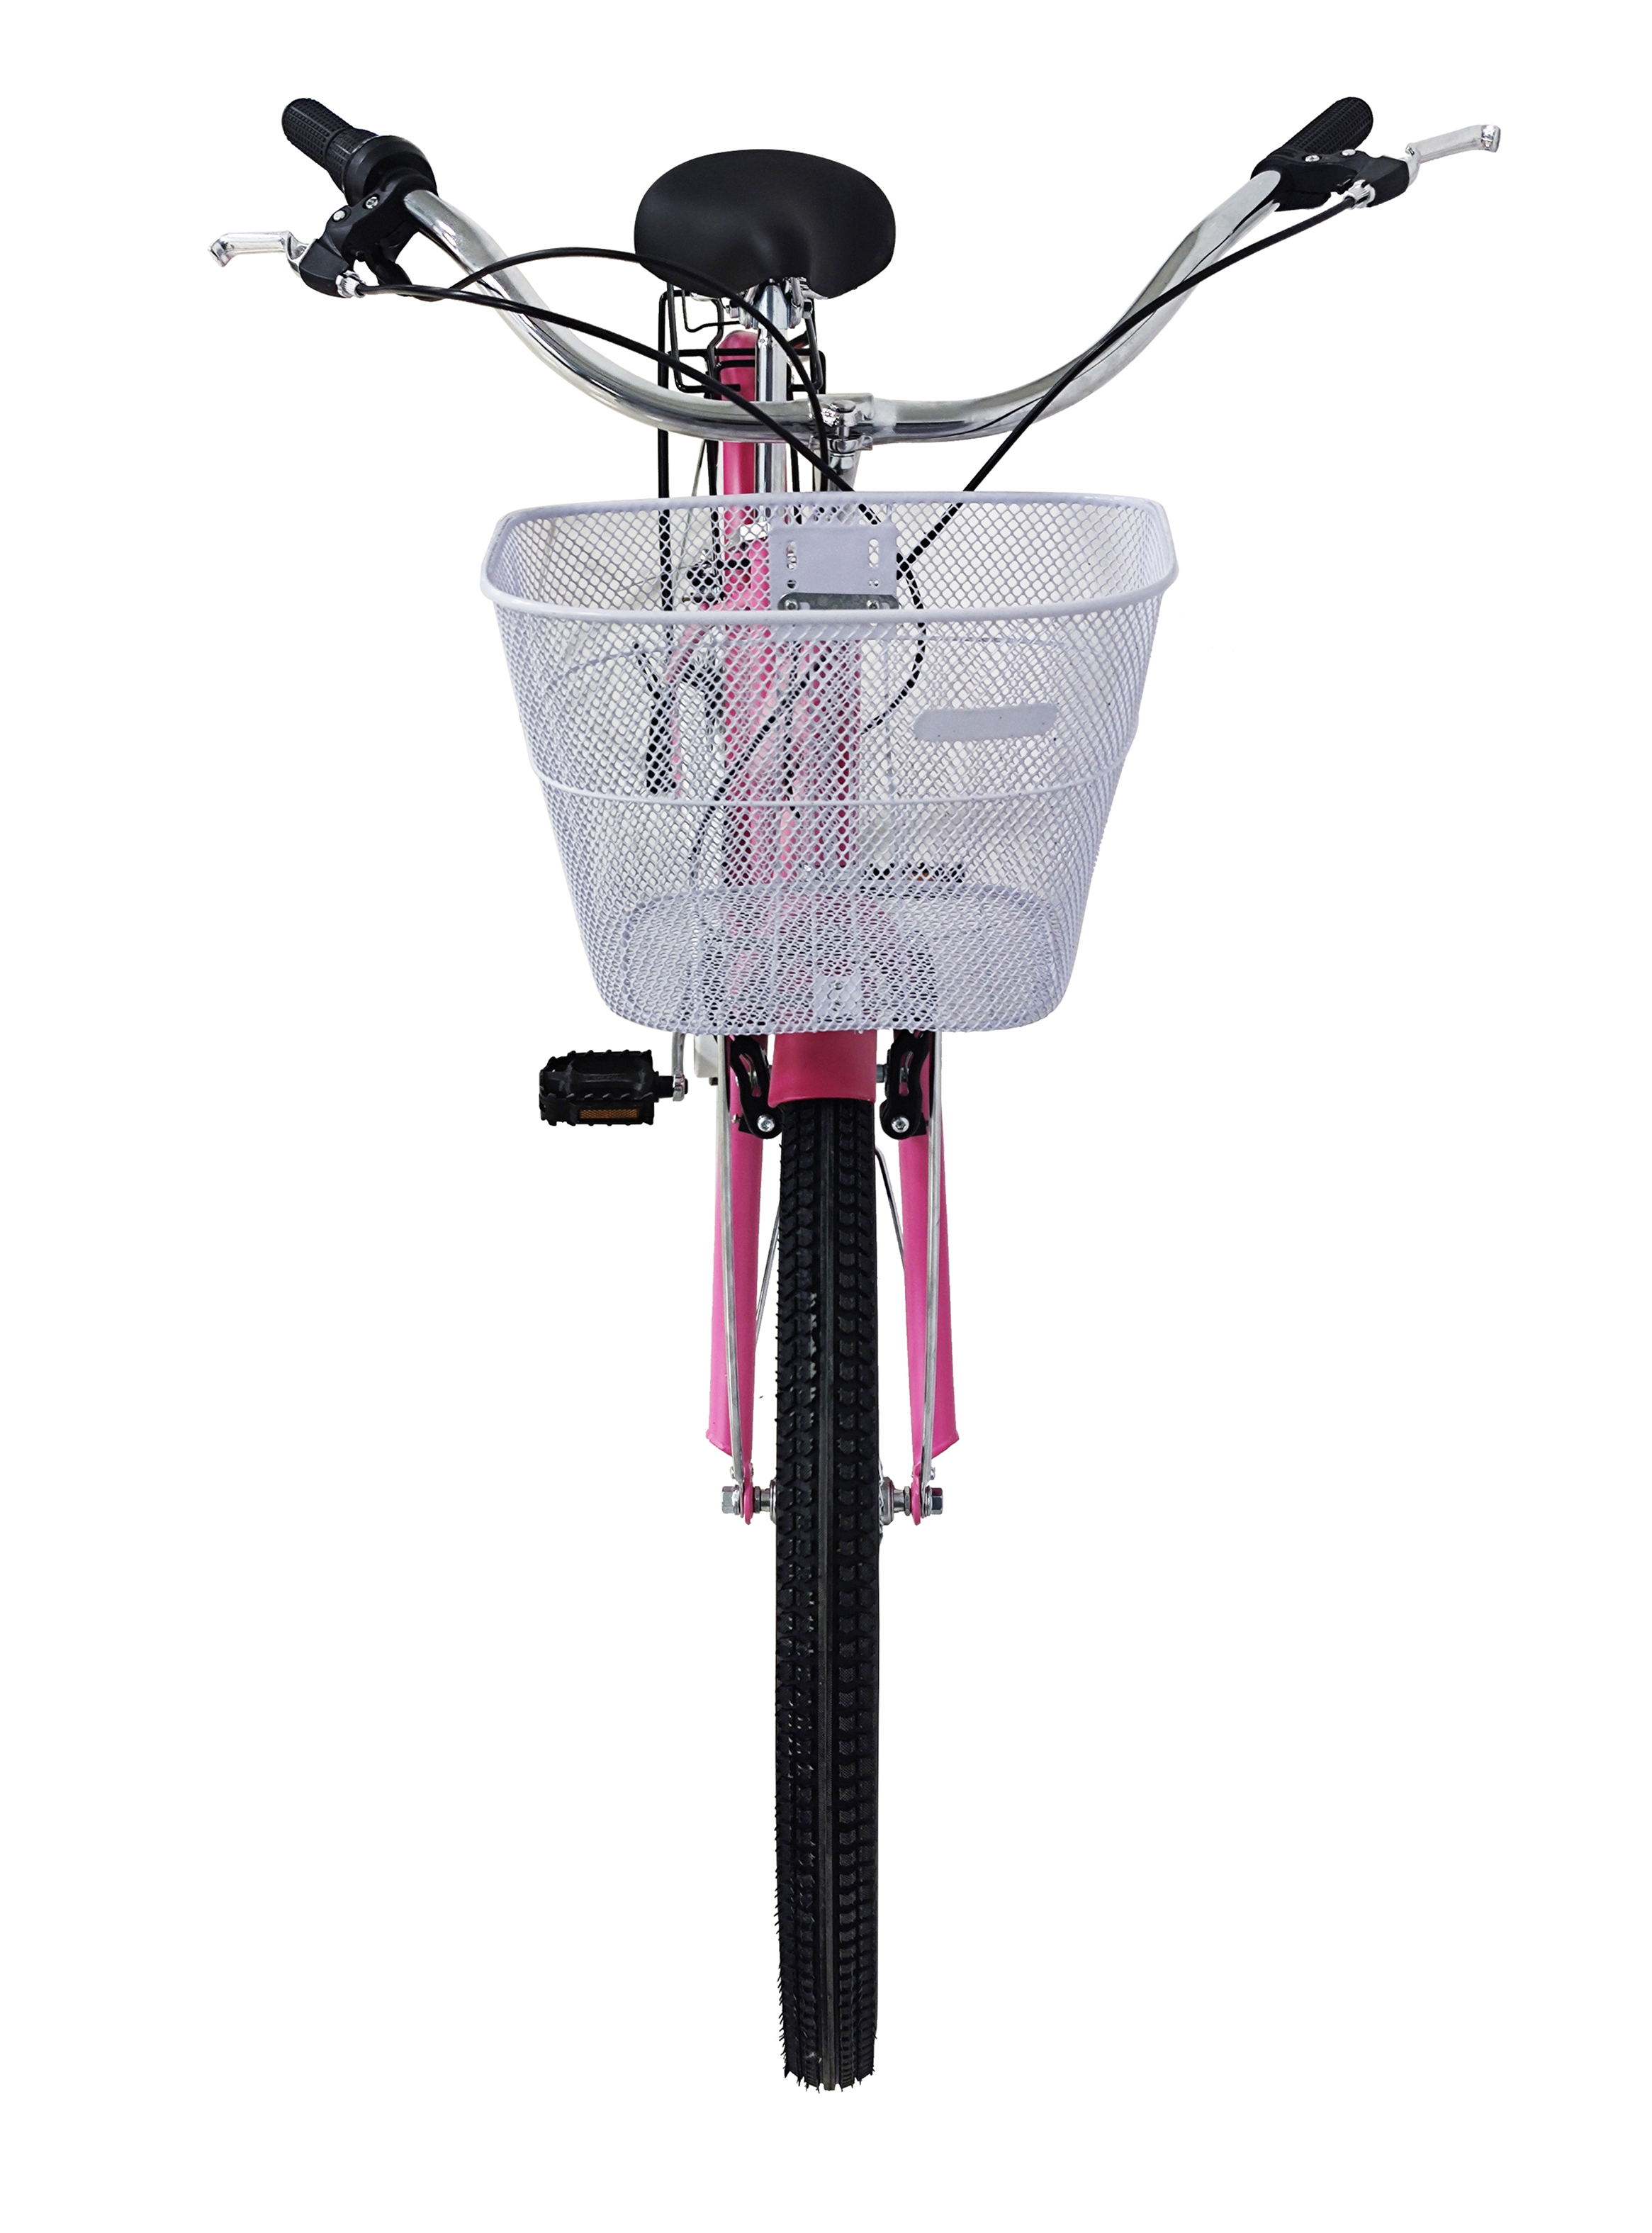 Bicicleta de paseo DHS 26 rosa